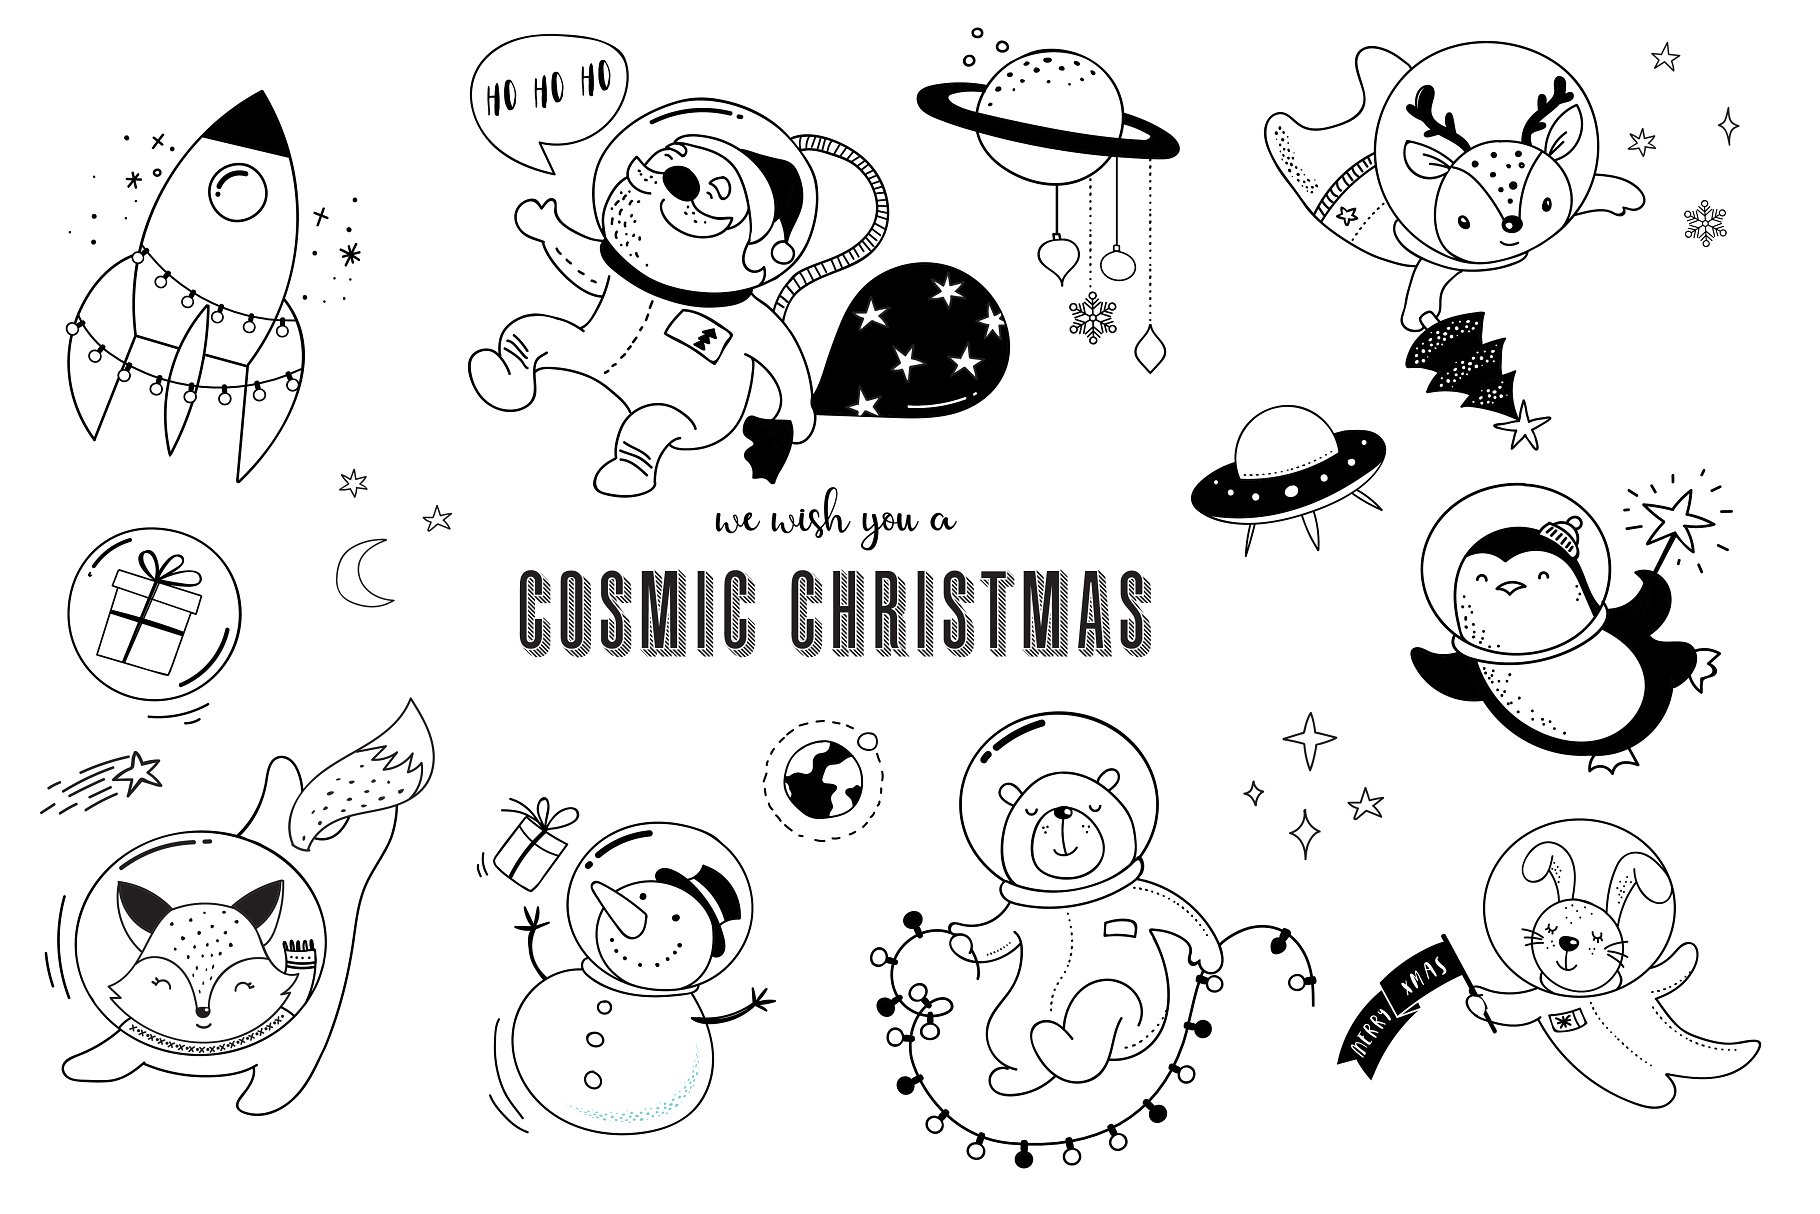 外太空宇宙圣诞节手绘插画素材 Cosmic Christmas in outer space插图(2)